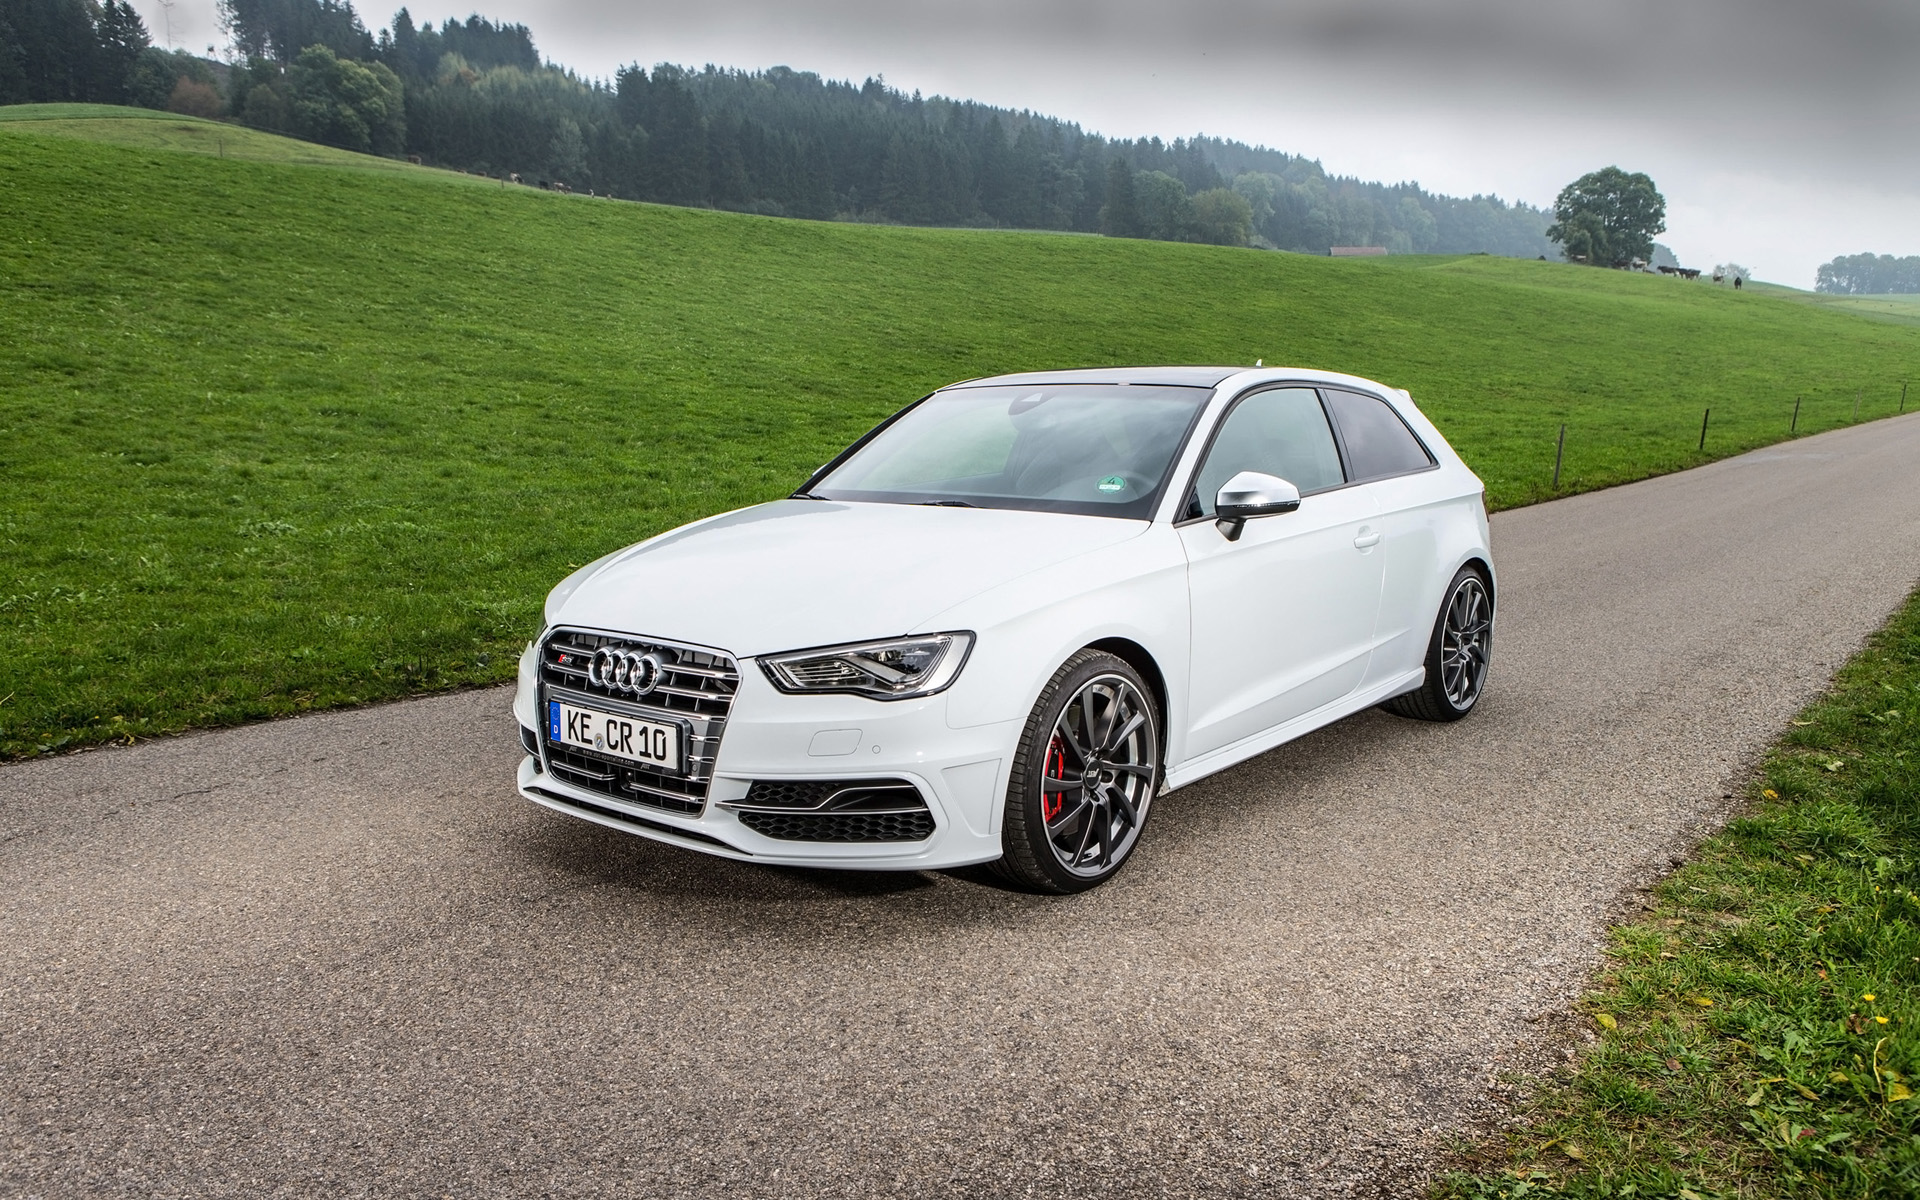 Audi S3 Wallpaper Auto Tuning News Tuningspirit